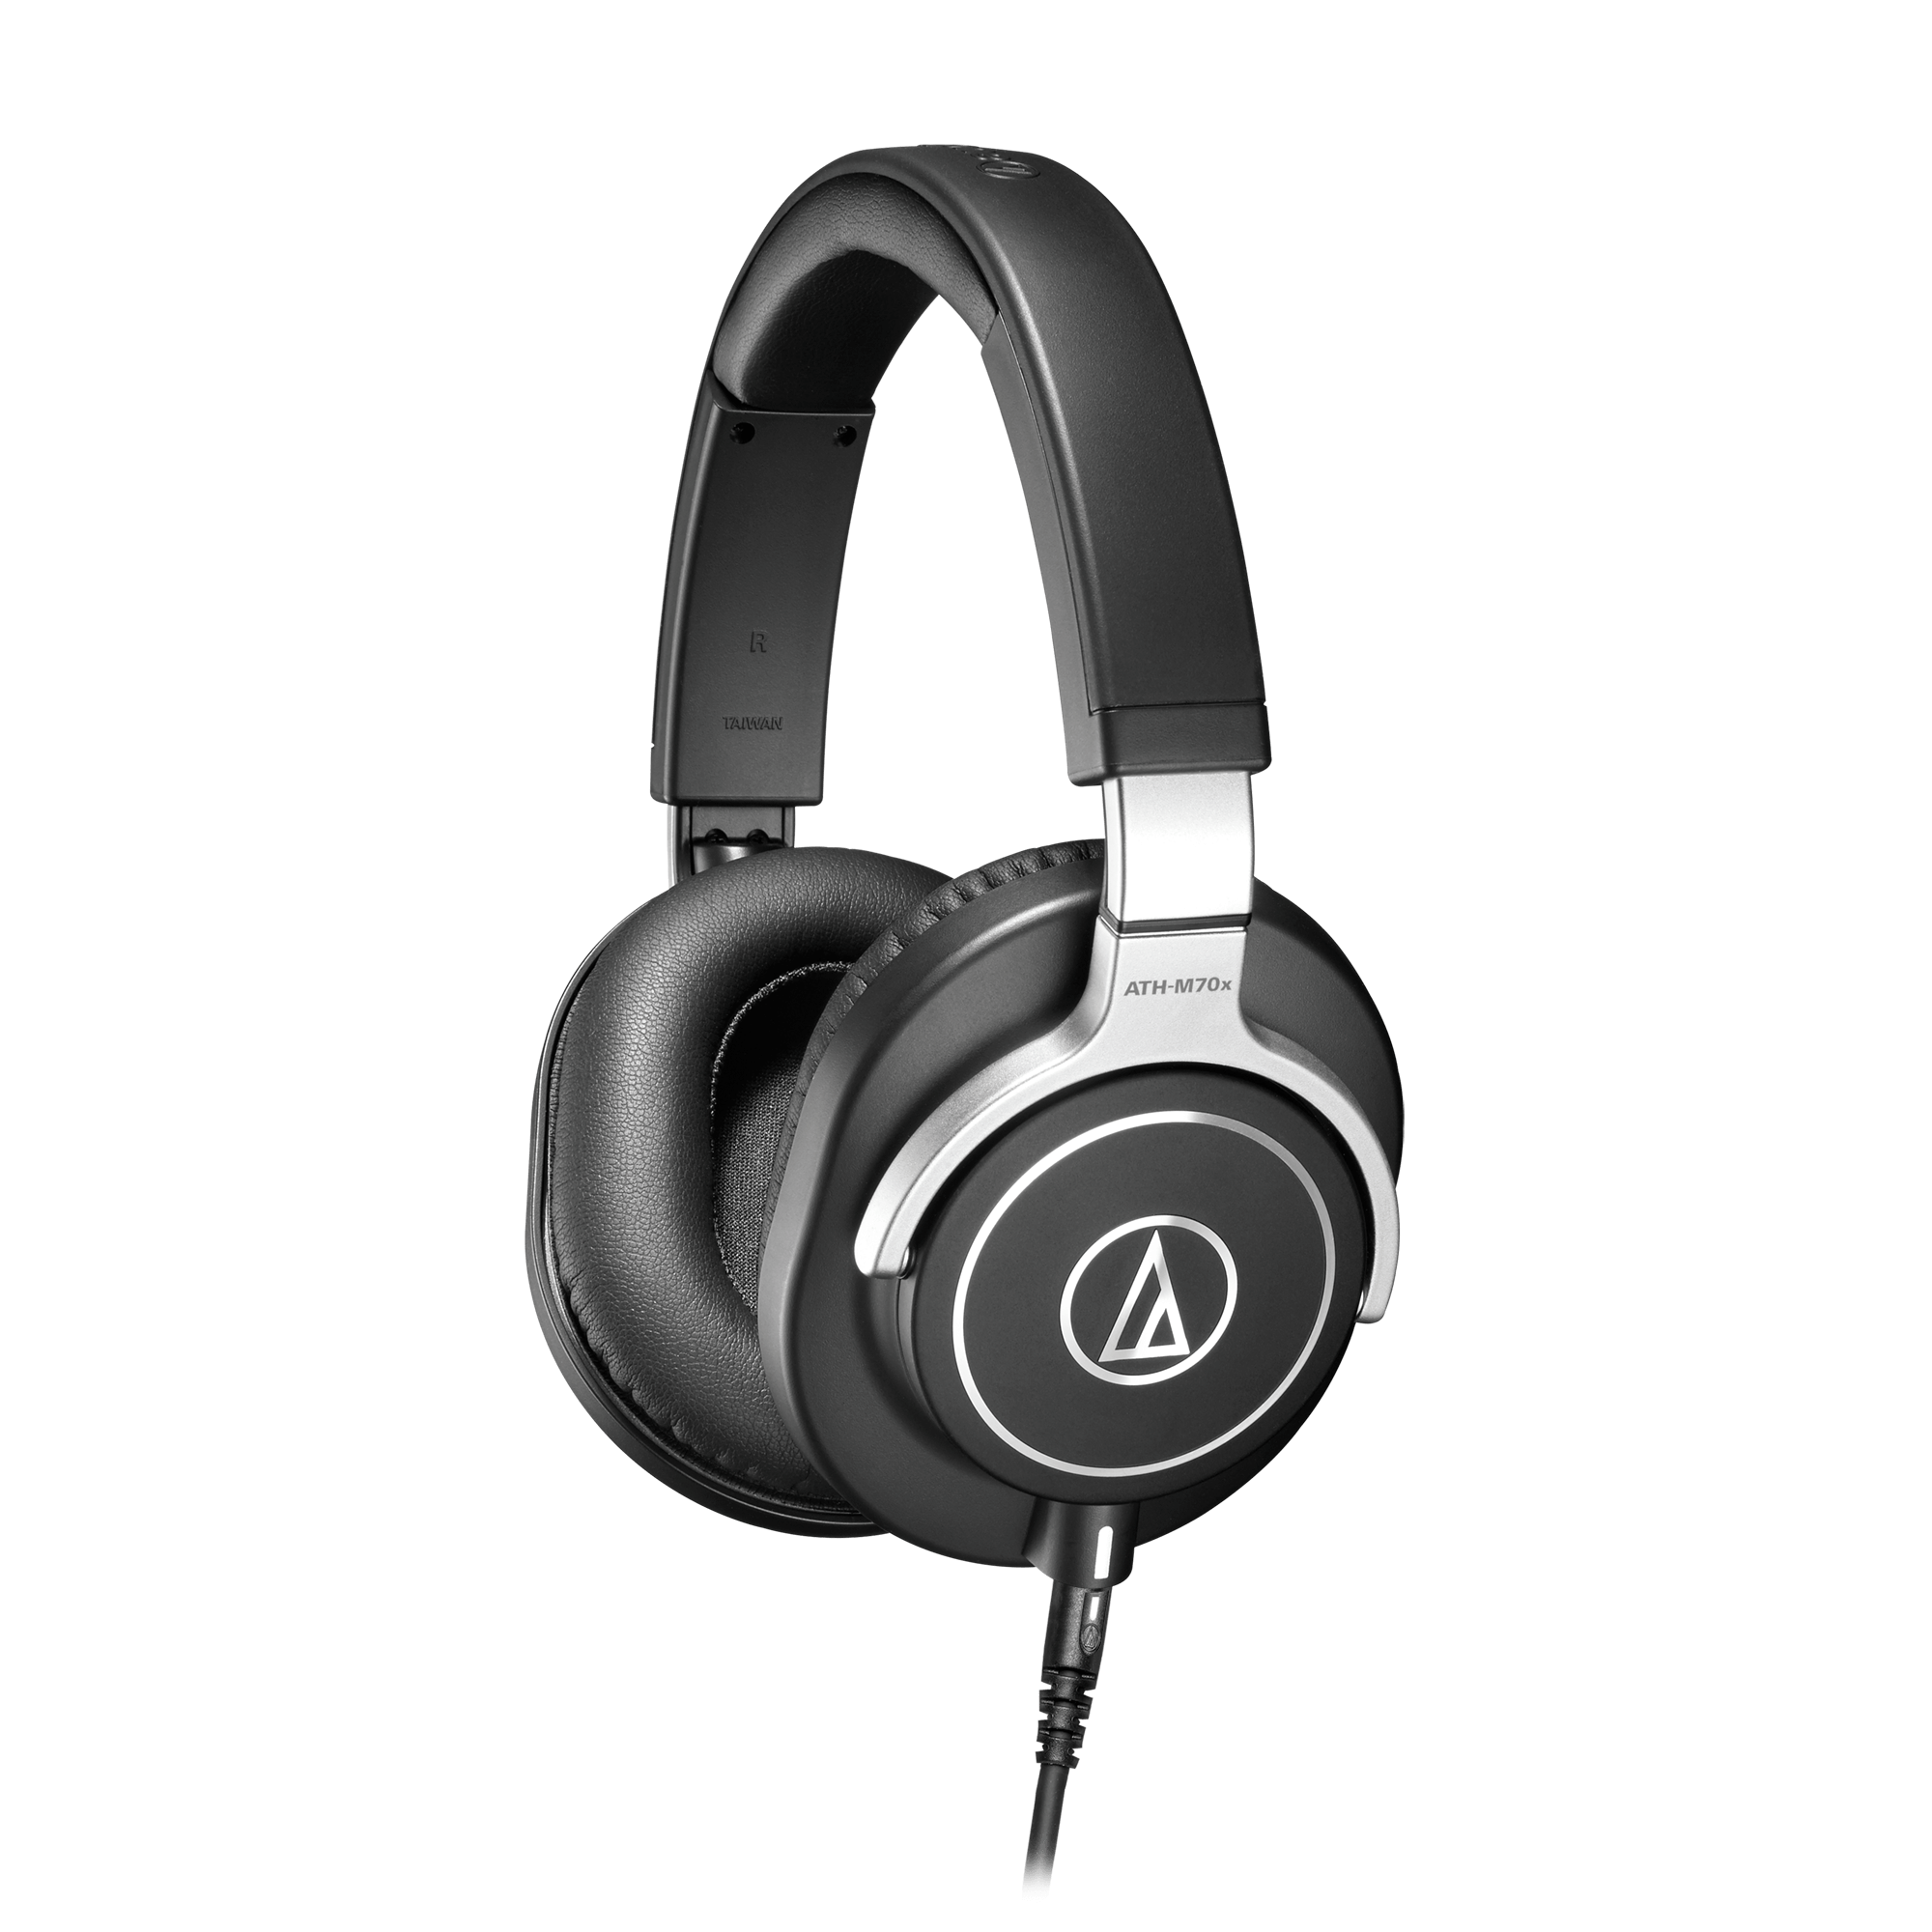 ATH-M70x | Professional Monitor Headphones | Audio-Technica